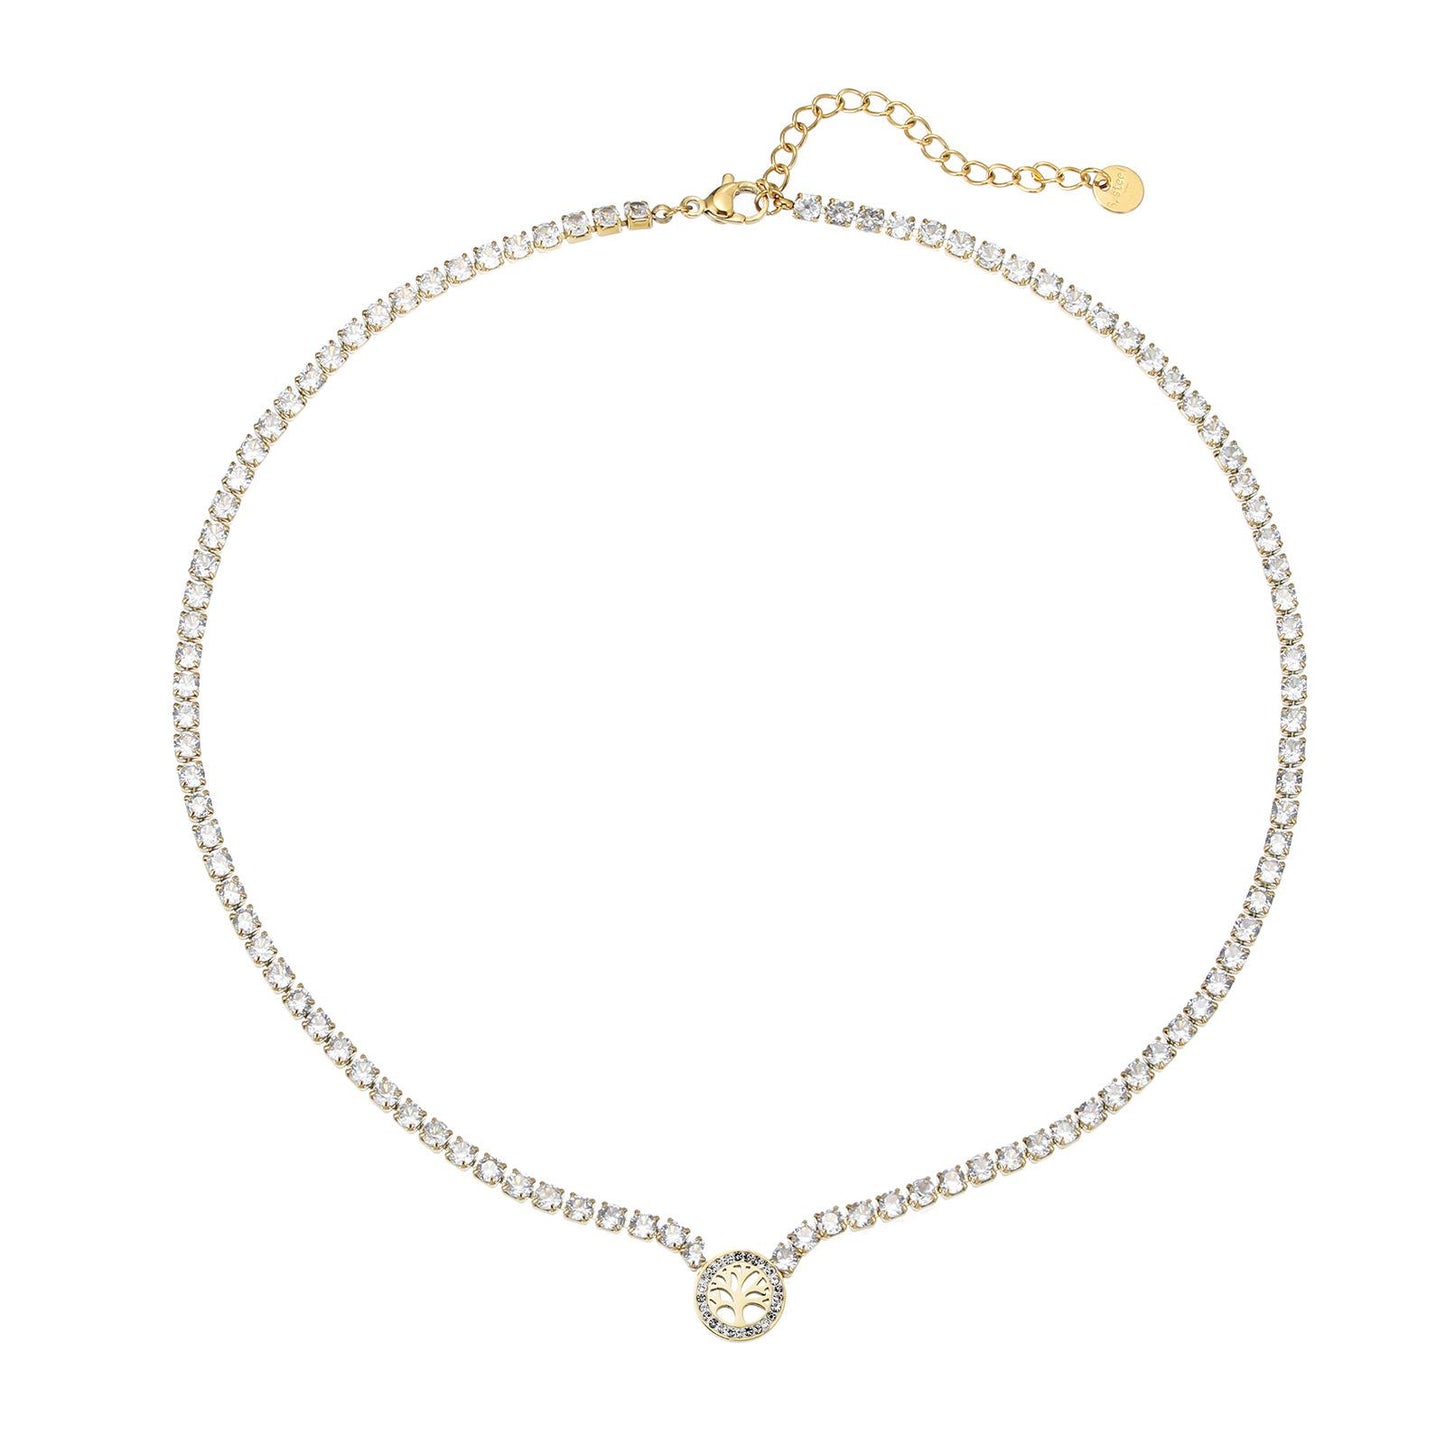 Non-fading tree of life bracelet necklace jewelry set